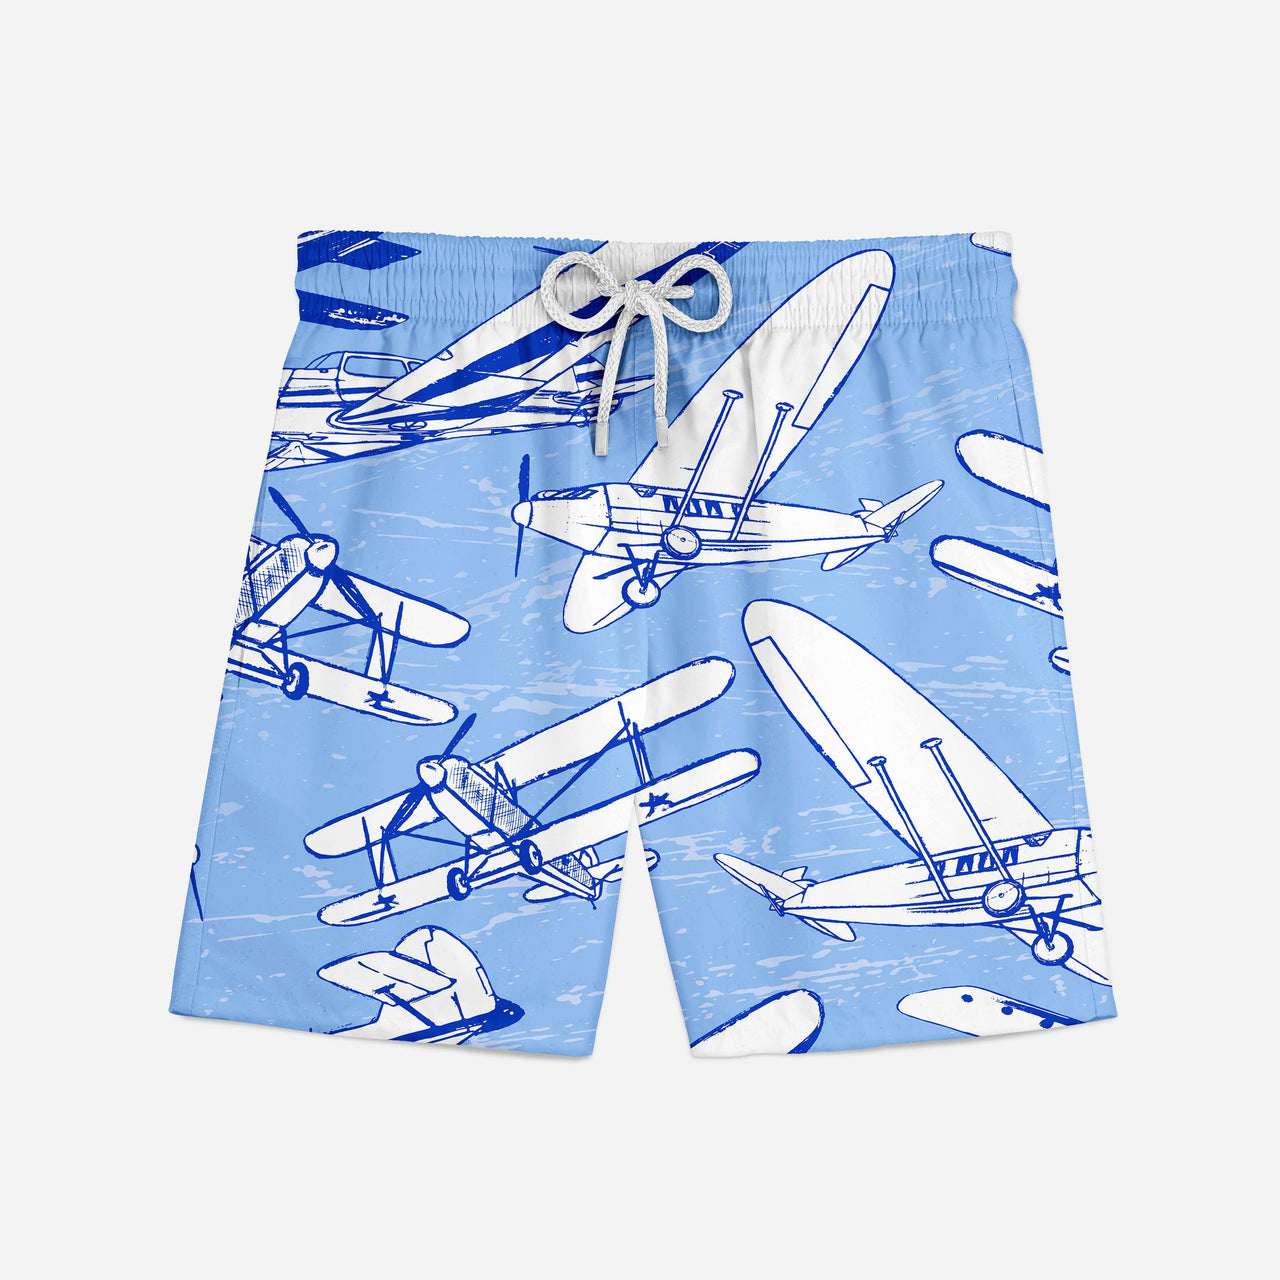 Retro & Vintage Airplanes Designed Swim Trunks & Shorts